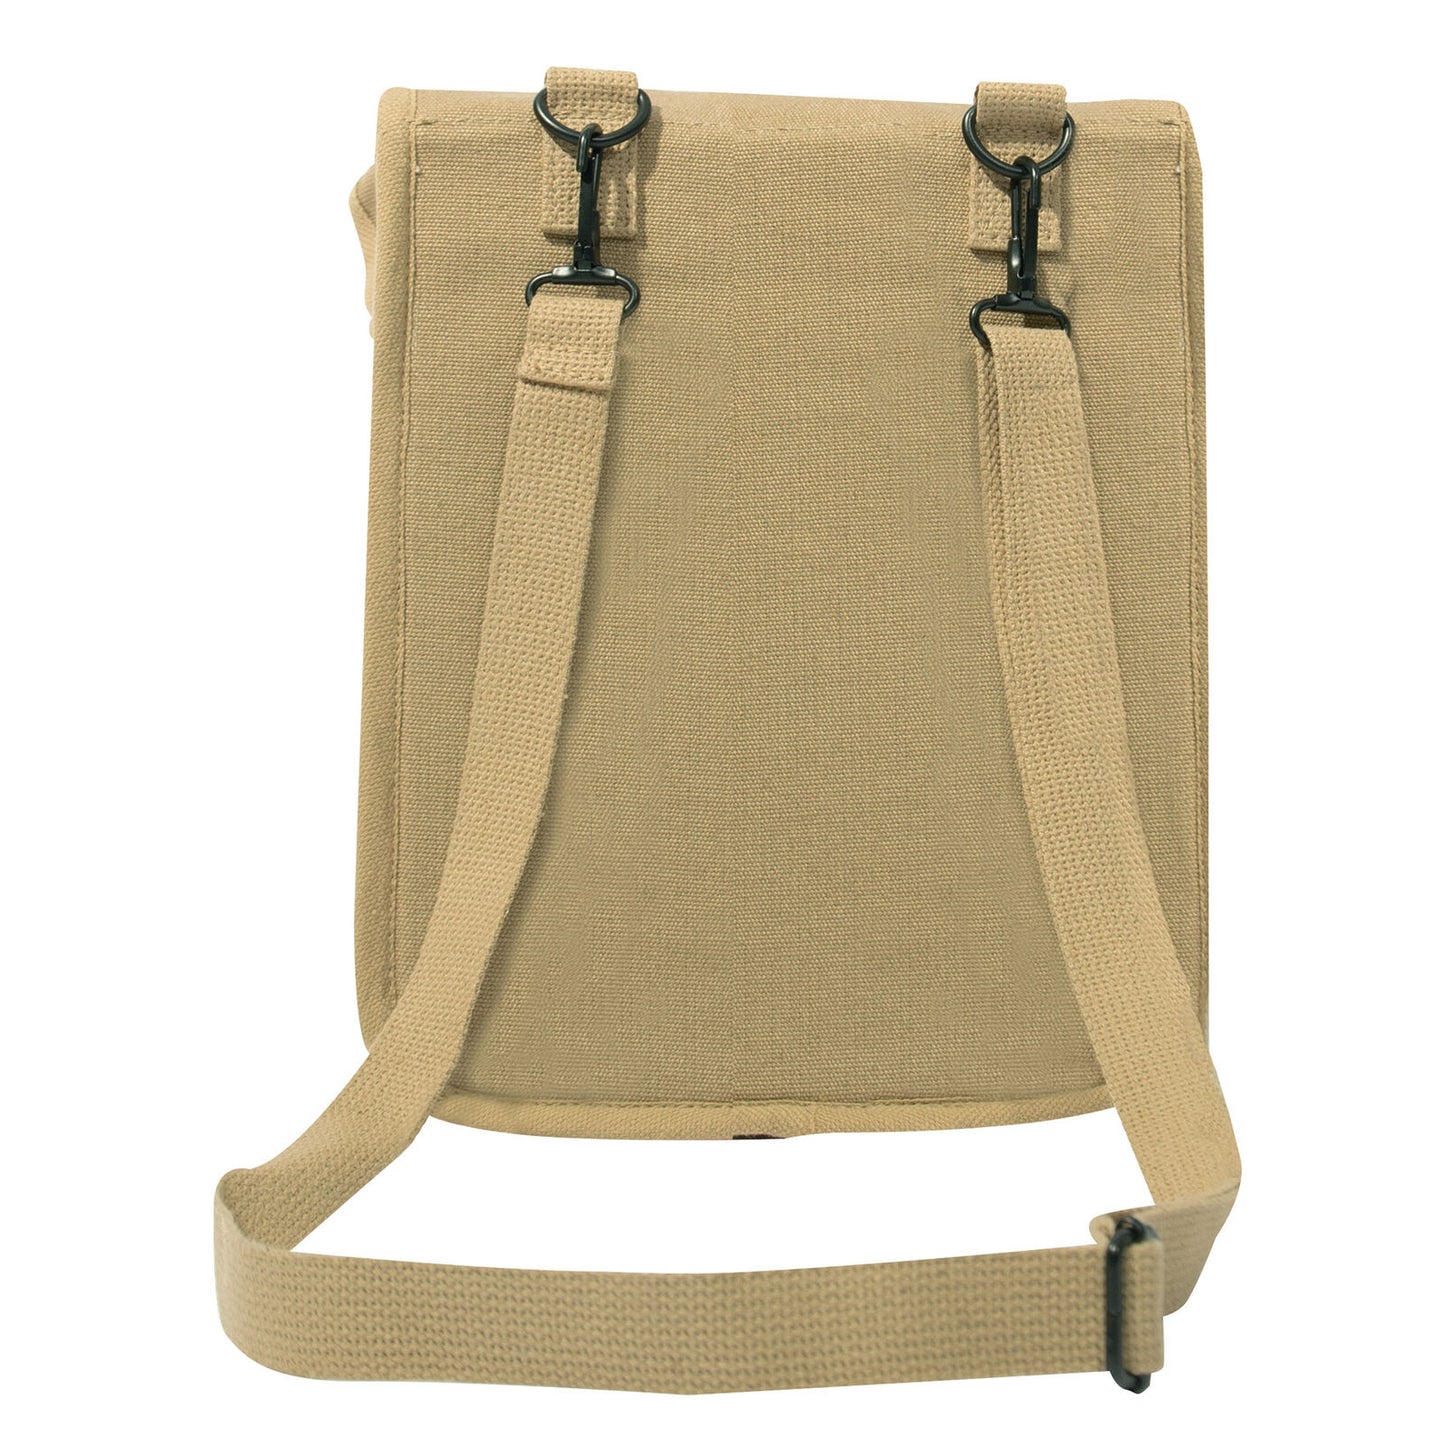 Rothco Canvas Map Case Shoulder Bag in Khaki - Messenger Travel Work School Bags